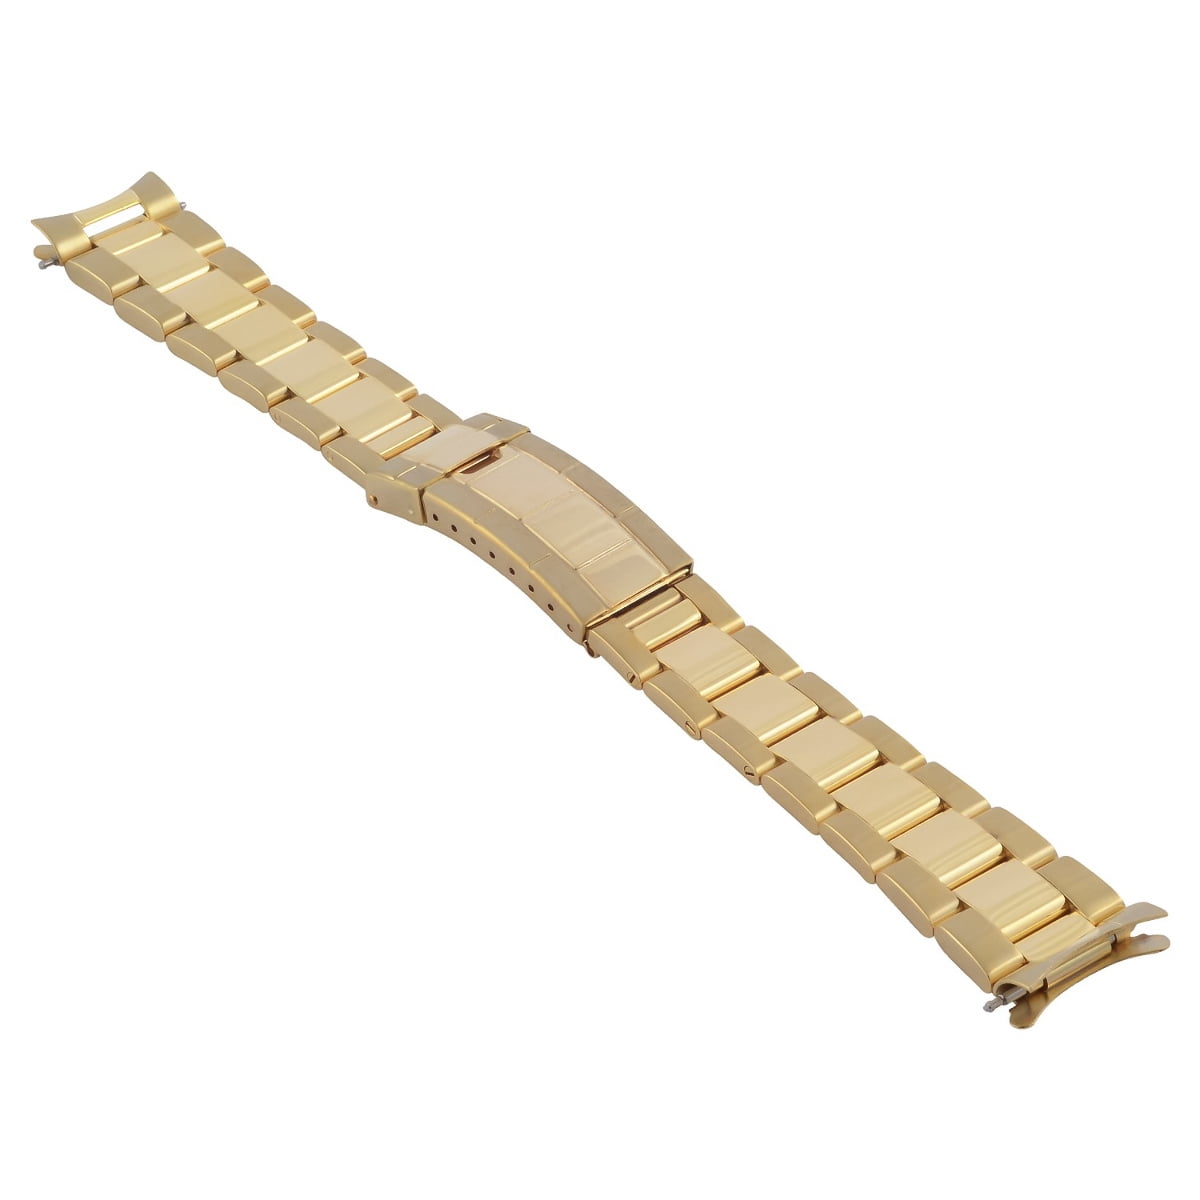 18k gold rolex watch bands